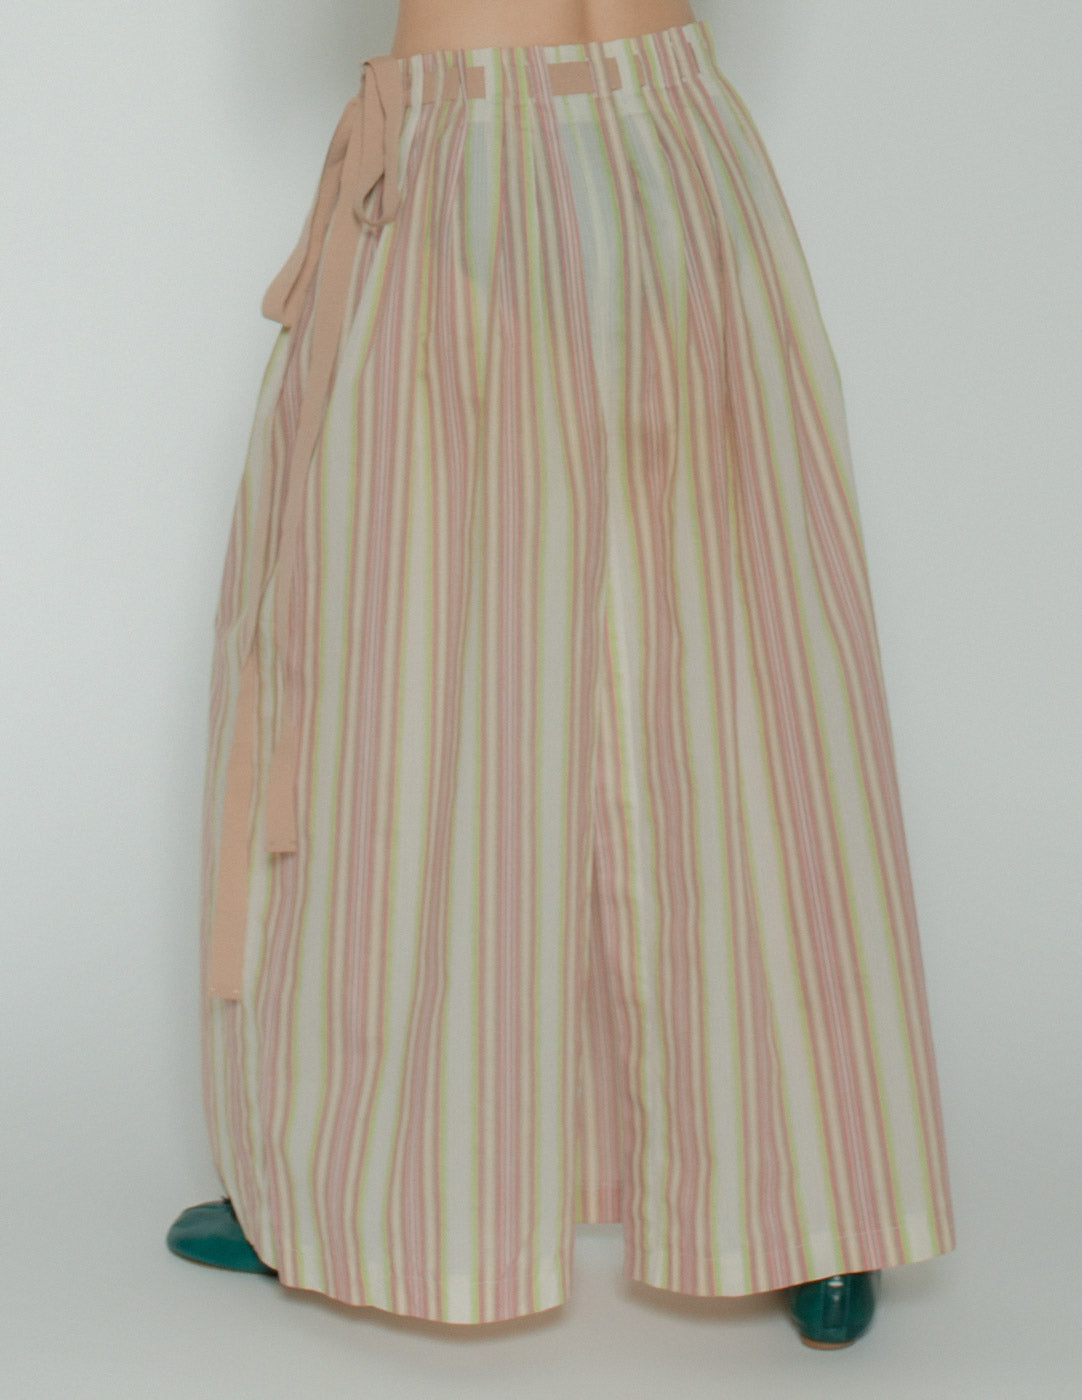 Romeo Gigli striped cotton skirt back detail